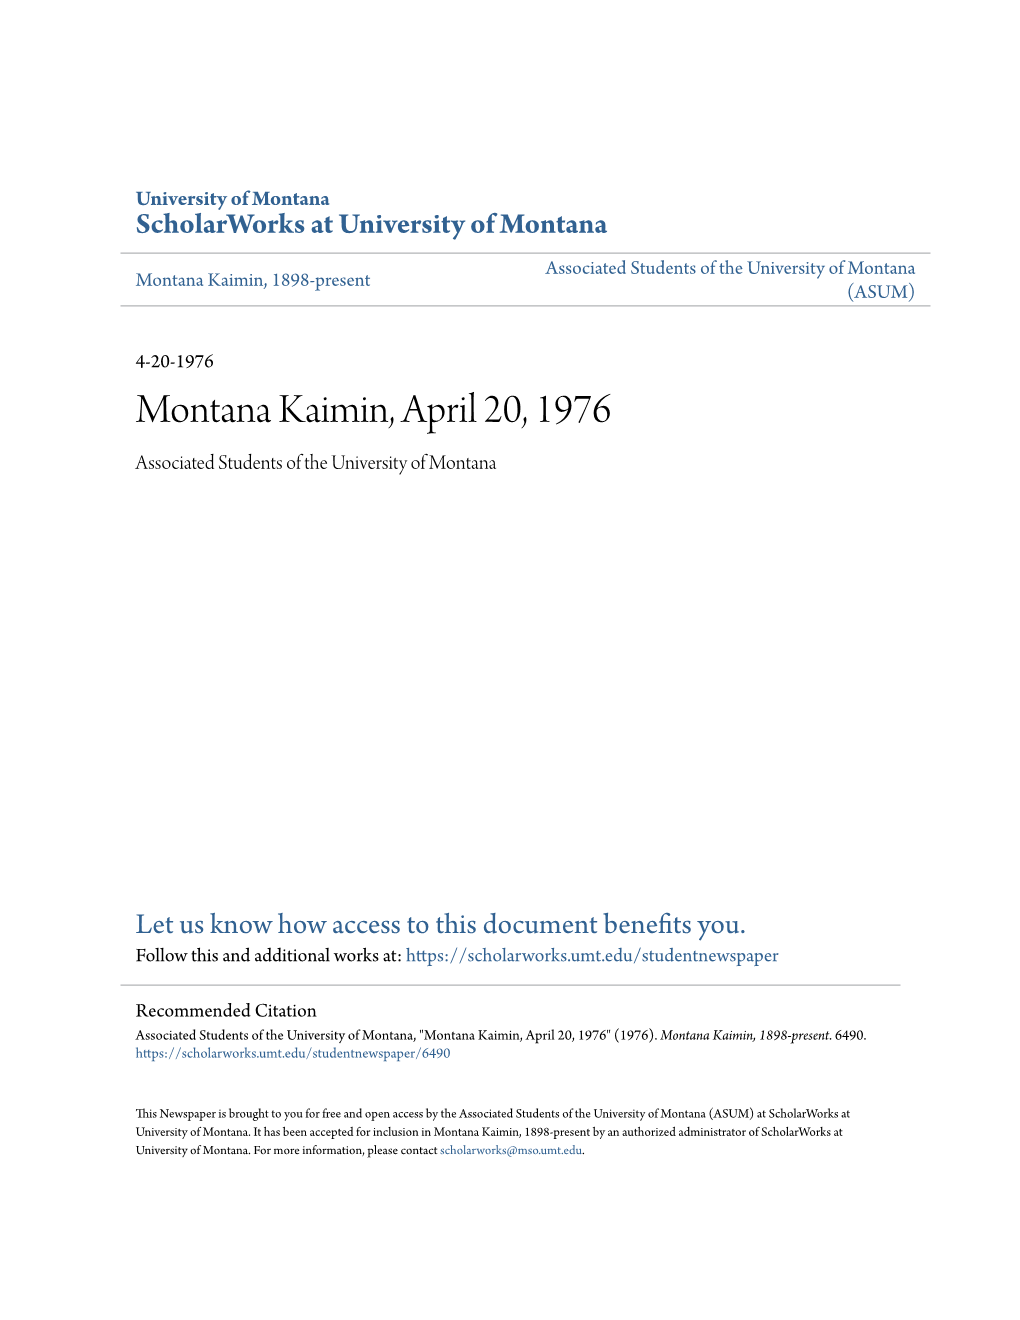 Montana Kaimin, April 20, 1976 Associated Students of the University of Montana